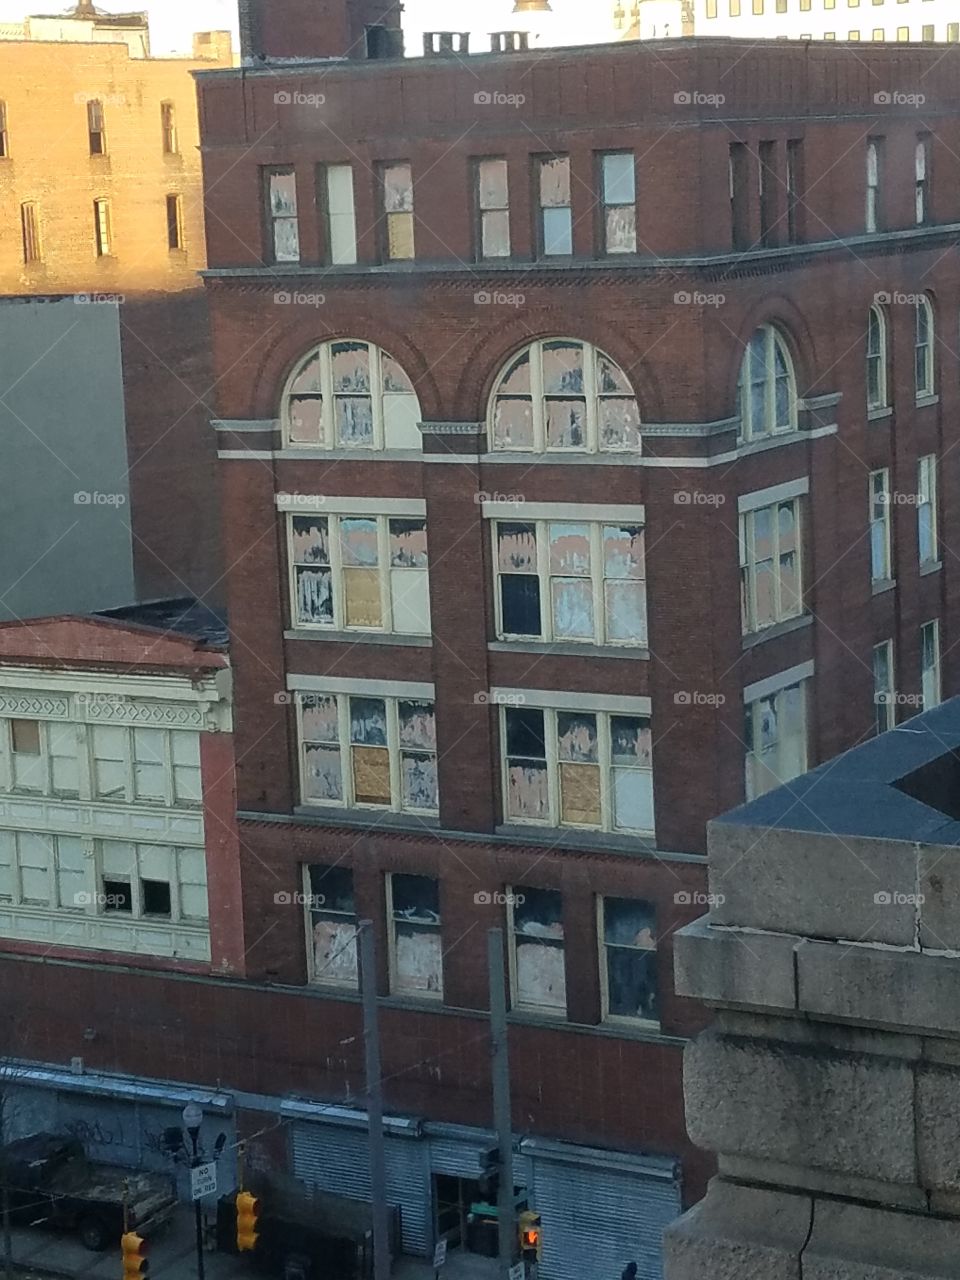 Building windows